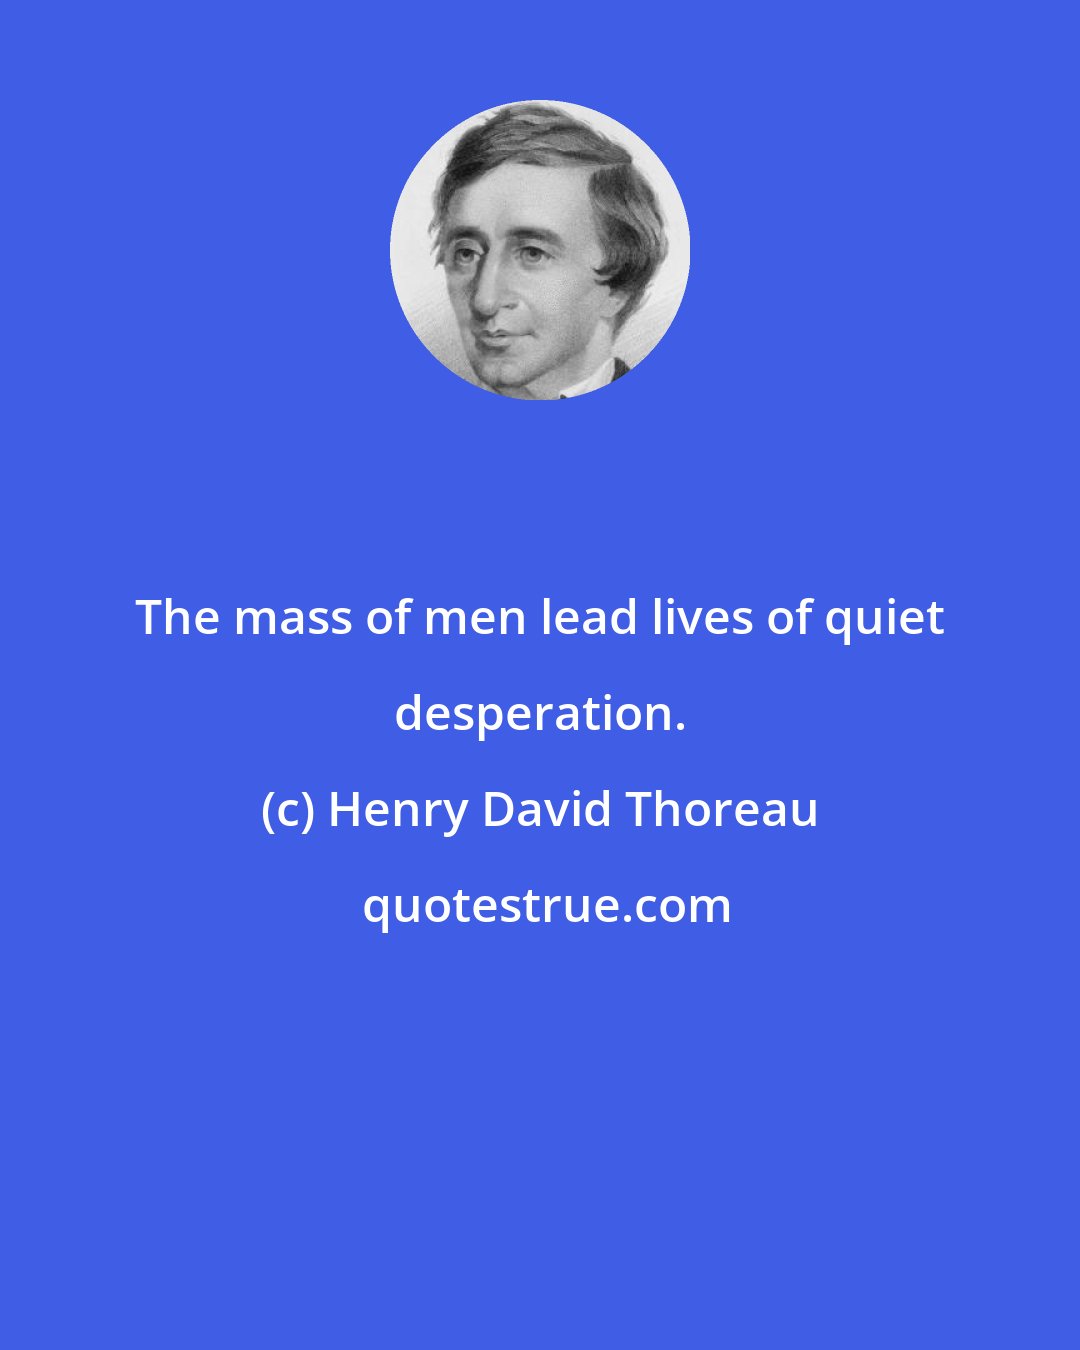 Henry David Thoreau: The mass of men lead lives of quiet desperation.